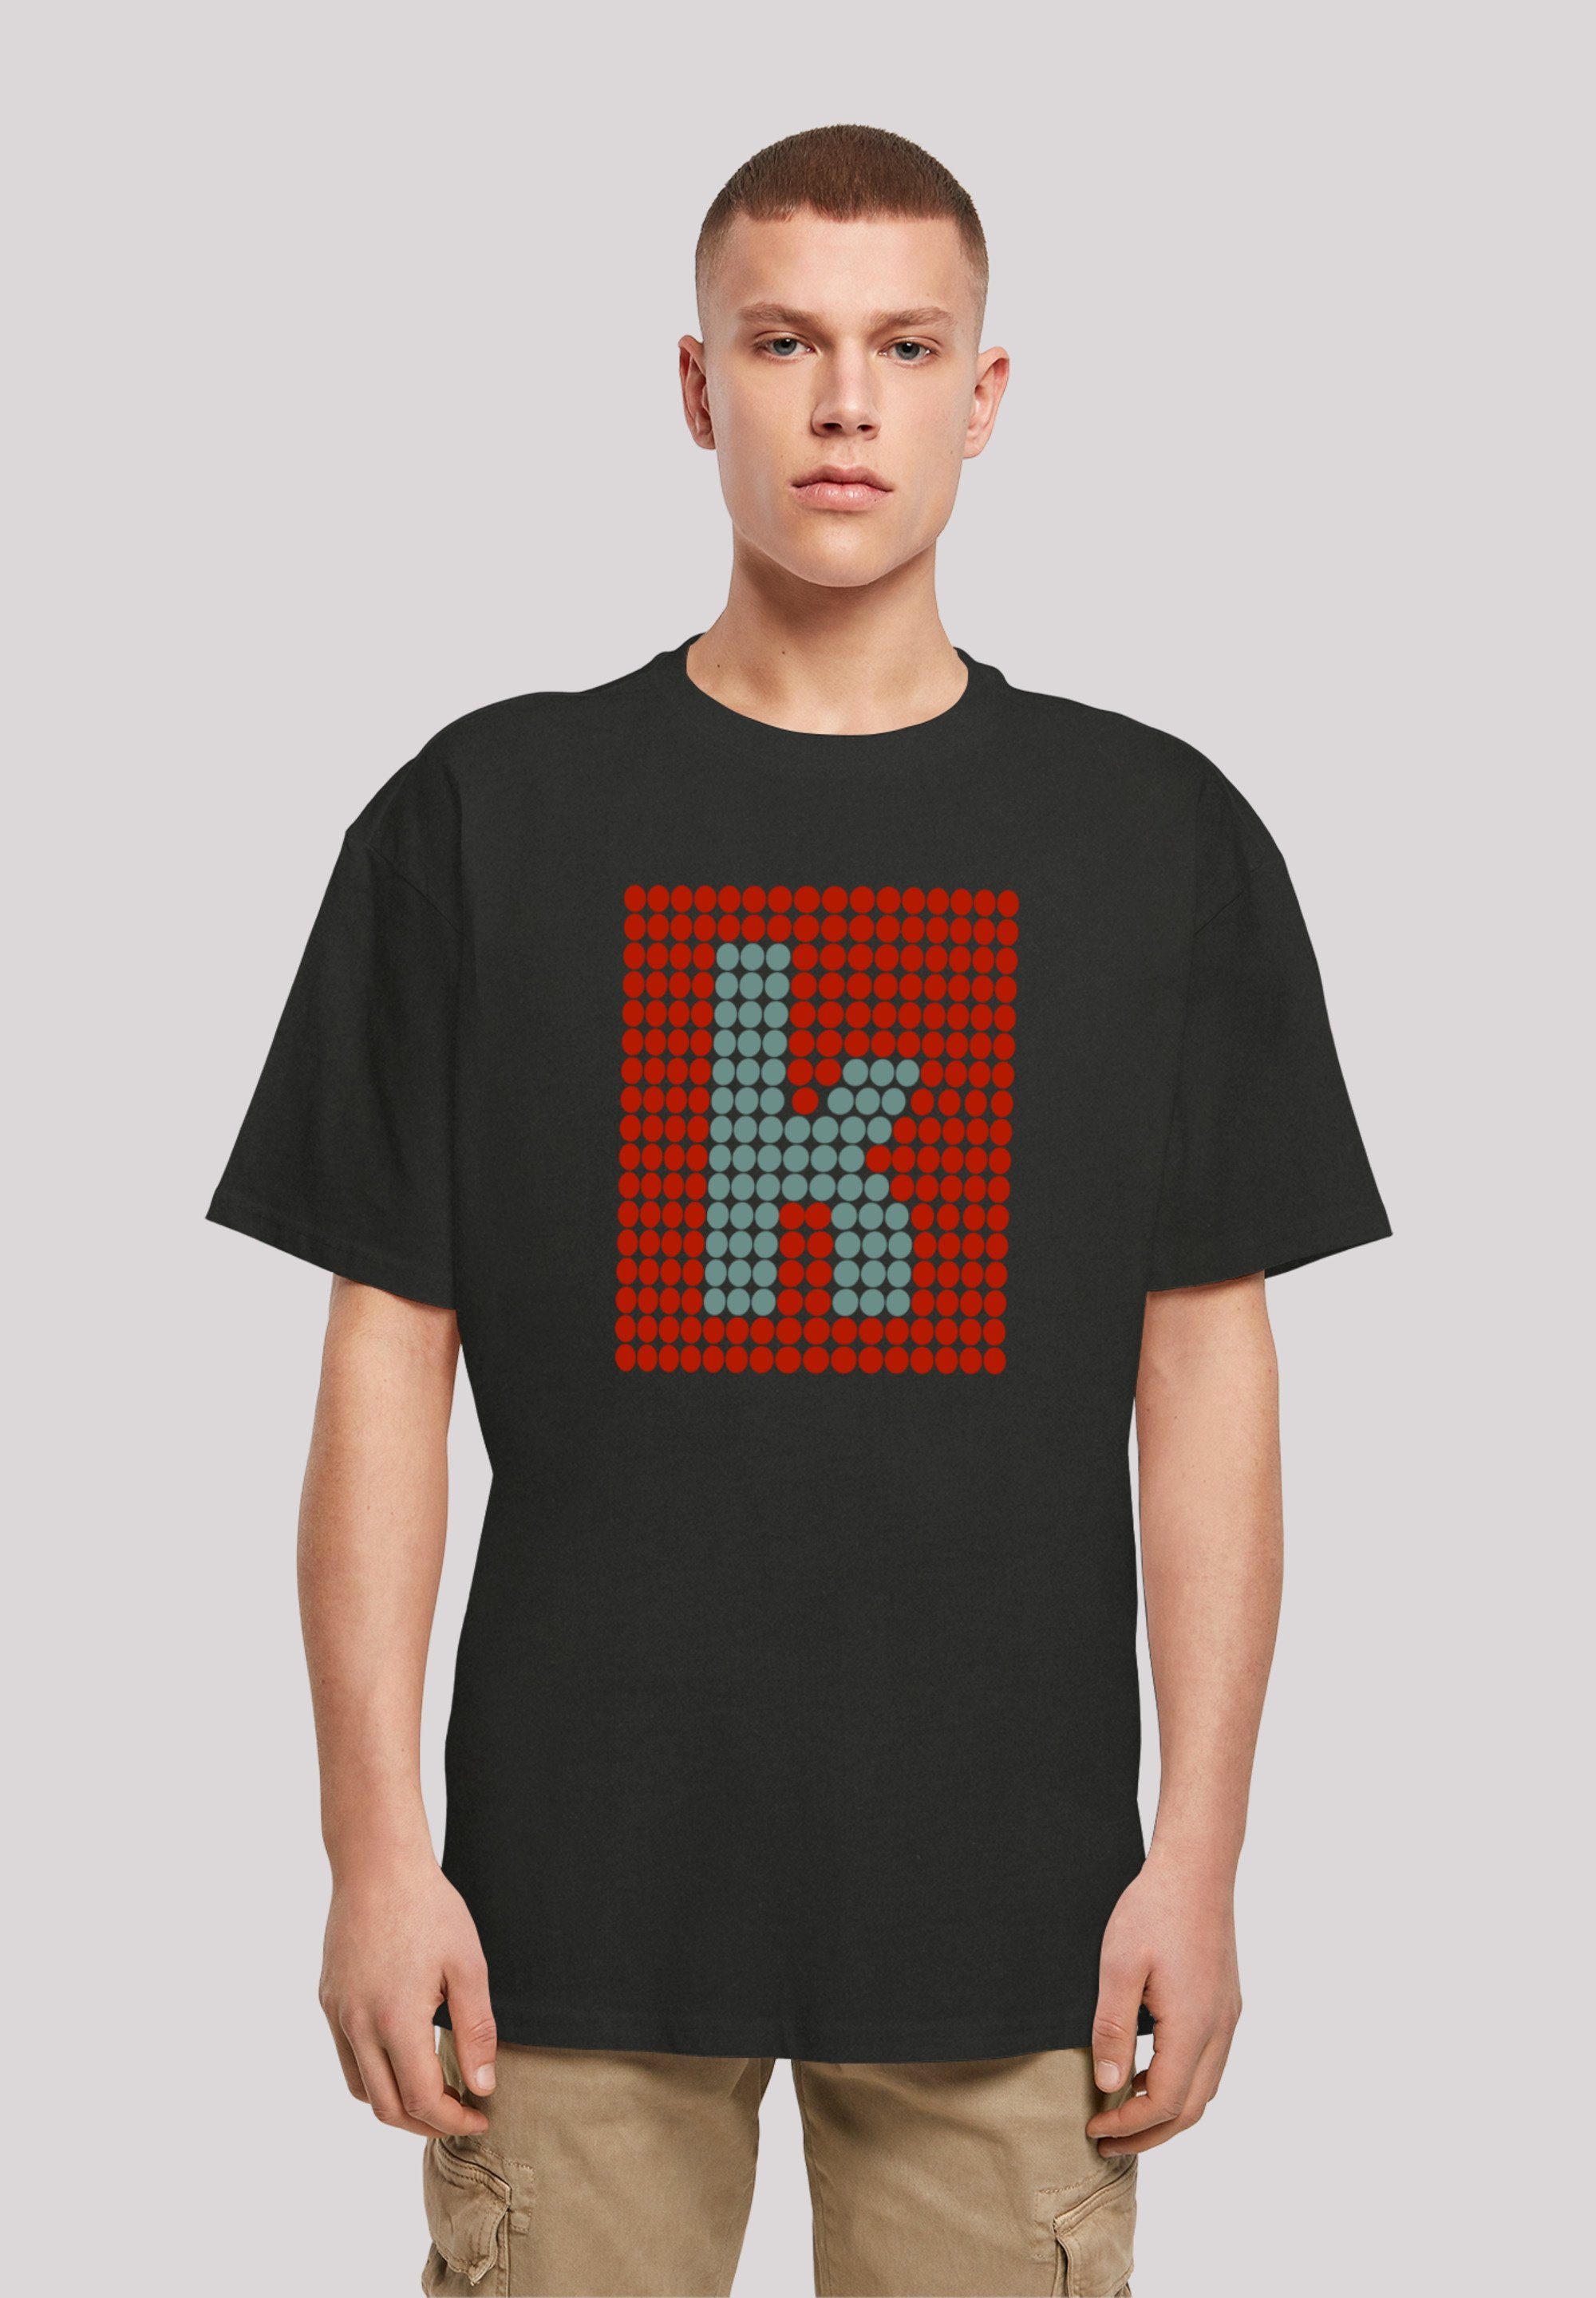 F4NT4STIC Black Band Killers T-Shirt Rock Glow schwarz The Print K